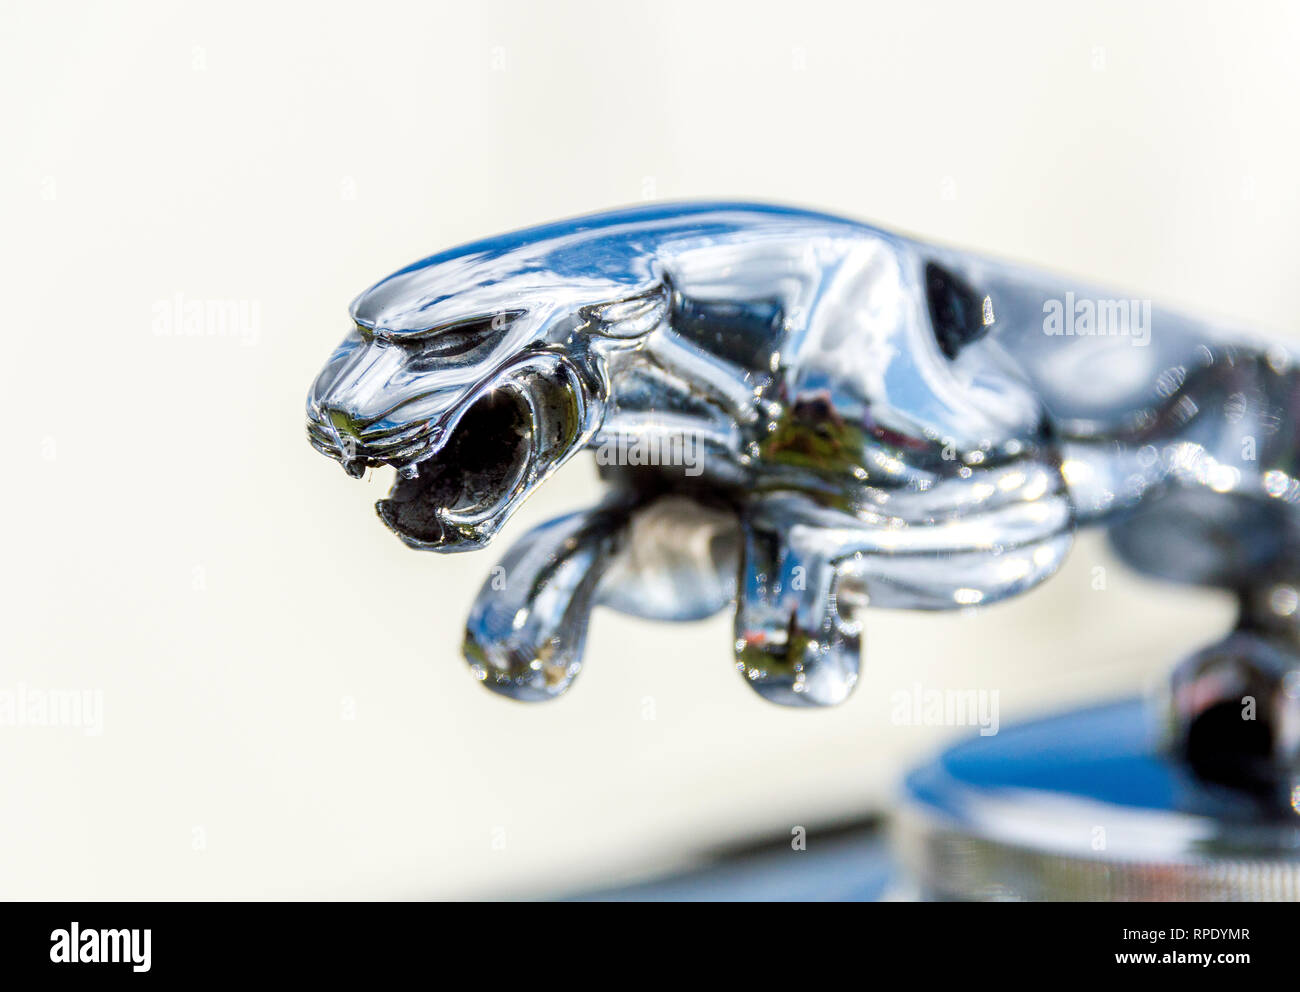 Chrome jaguar hi-res stock photography and images - Alamy